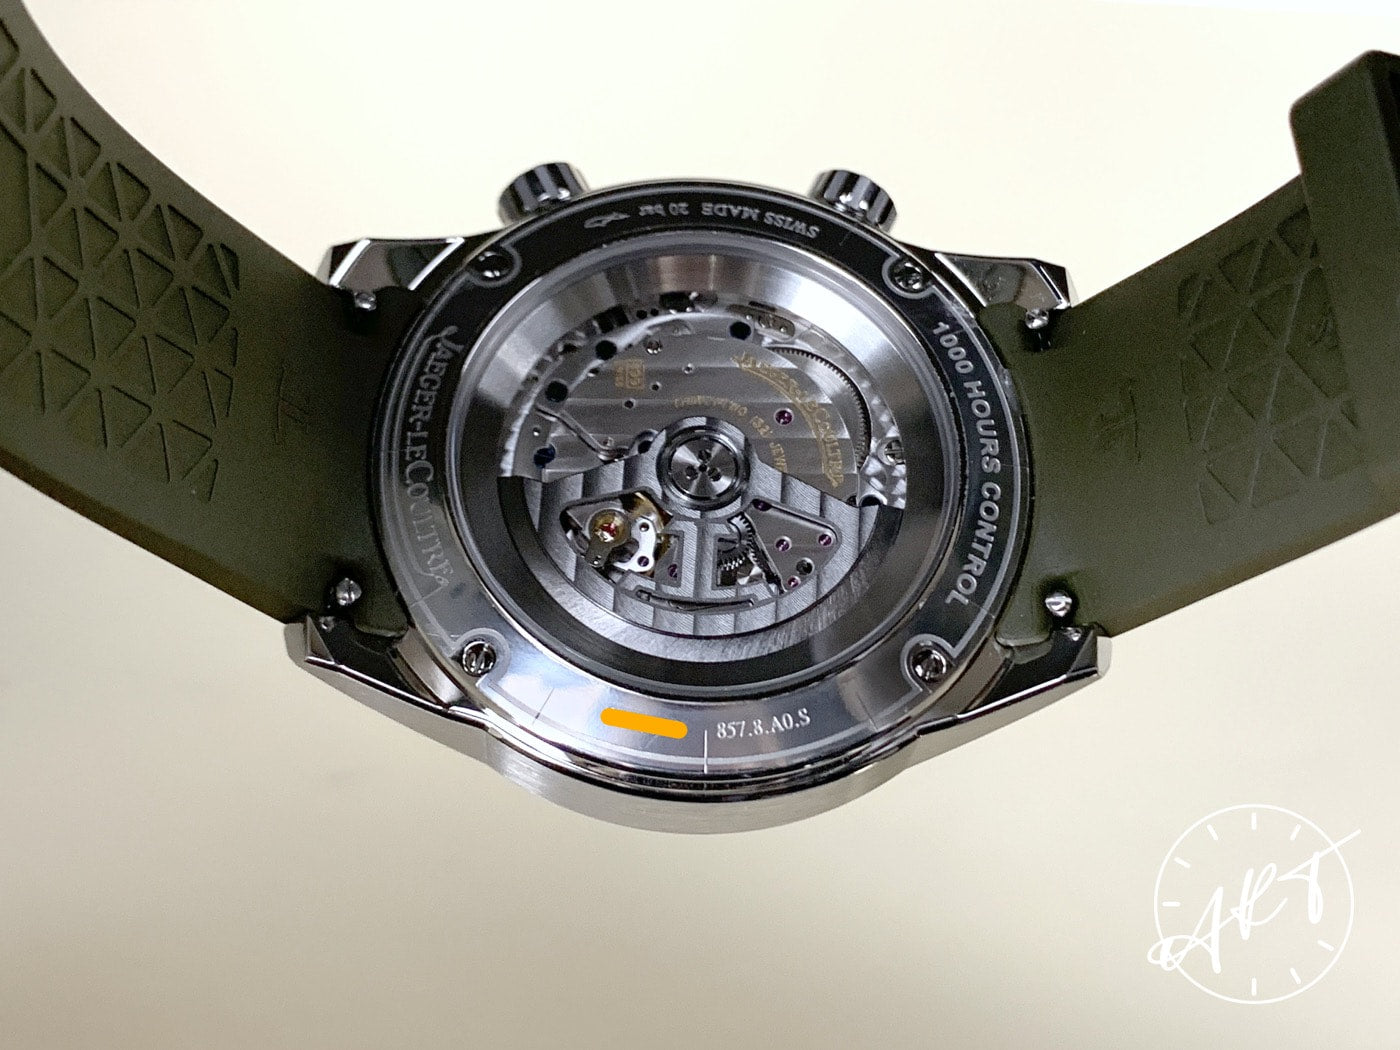 NEW Jaeger-LeCoultre Polaris Date Green Dial Boutique Edition Watch Q906863J BP